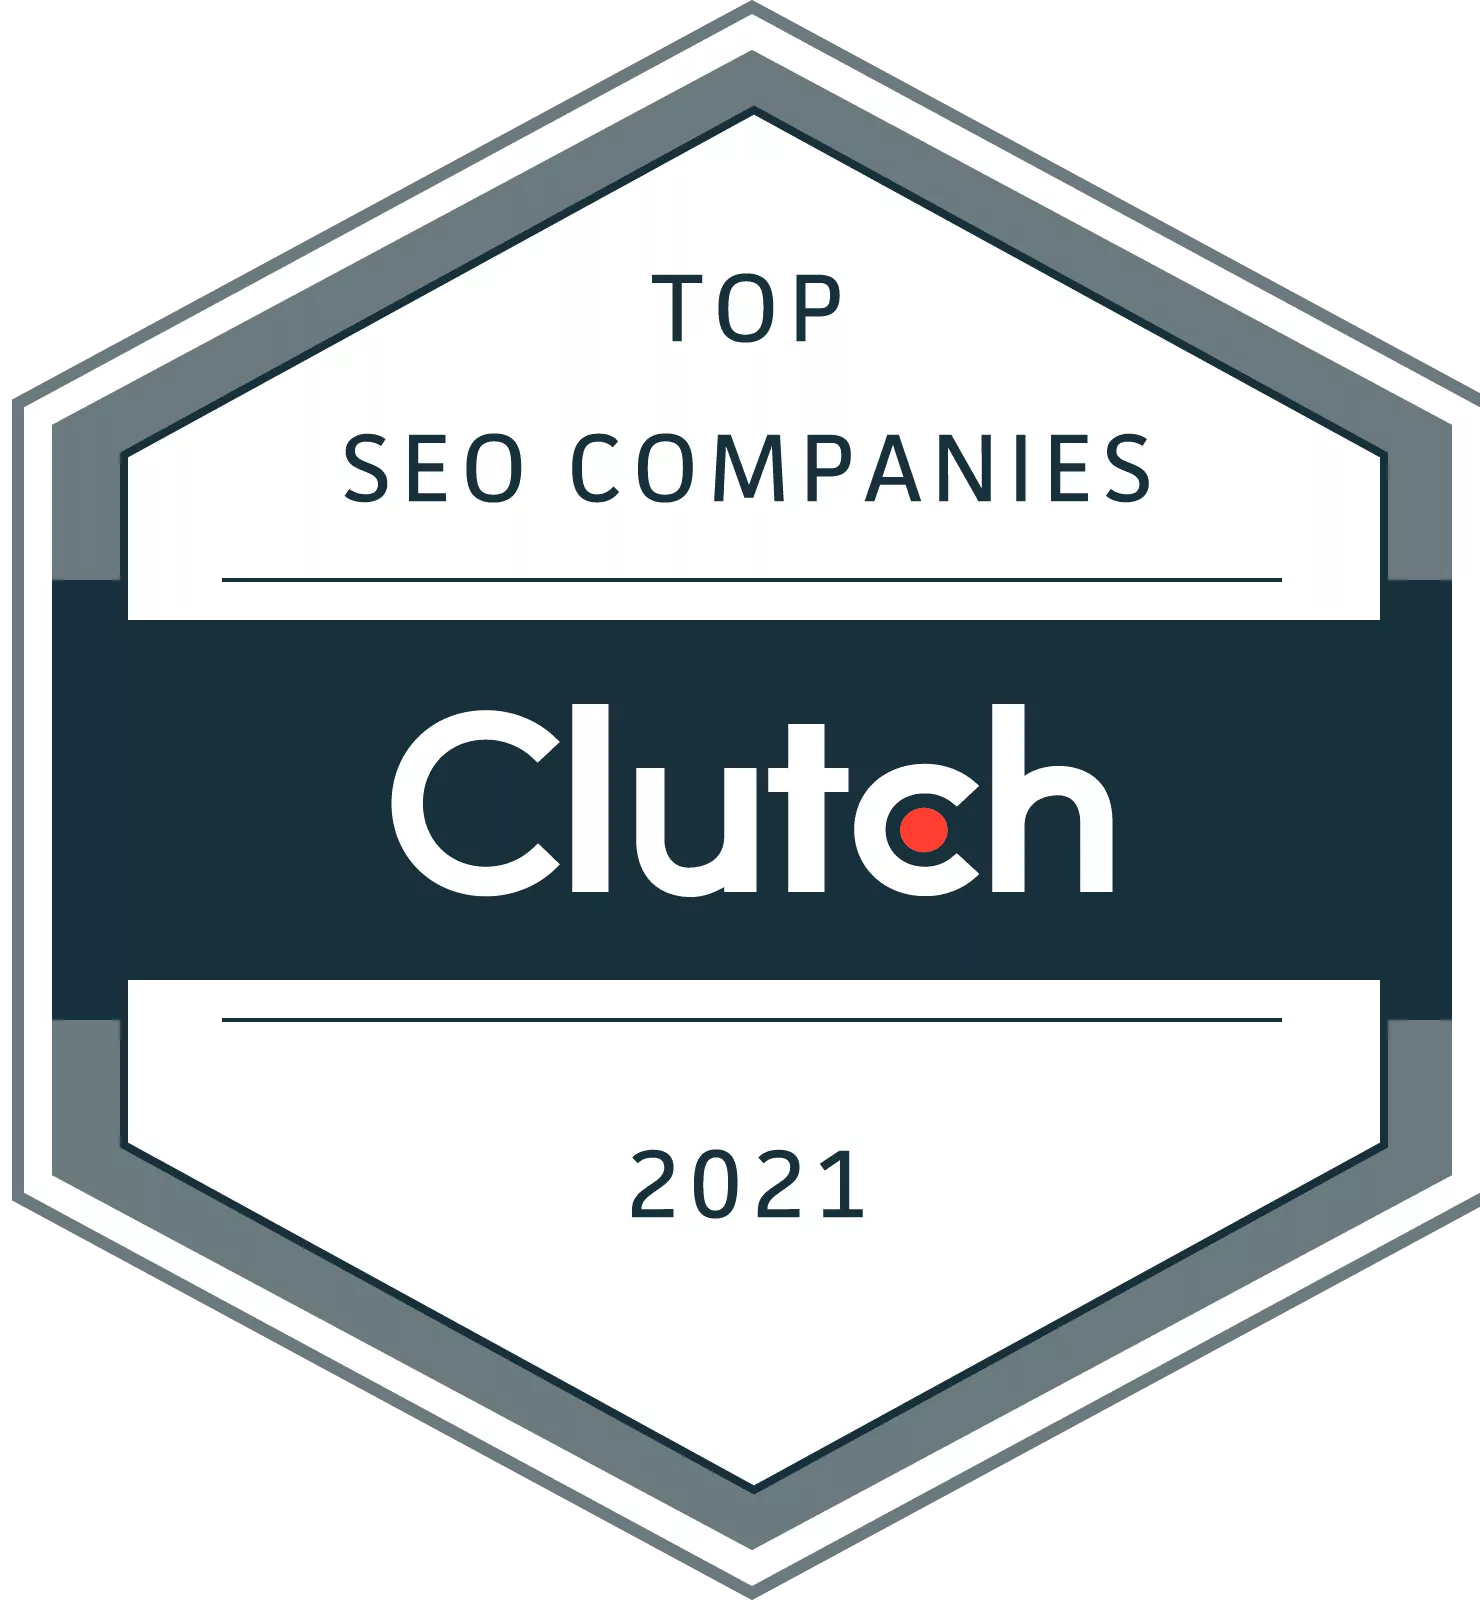 Top-SEO-Companies-2021-by-Clutch